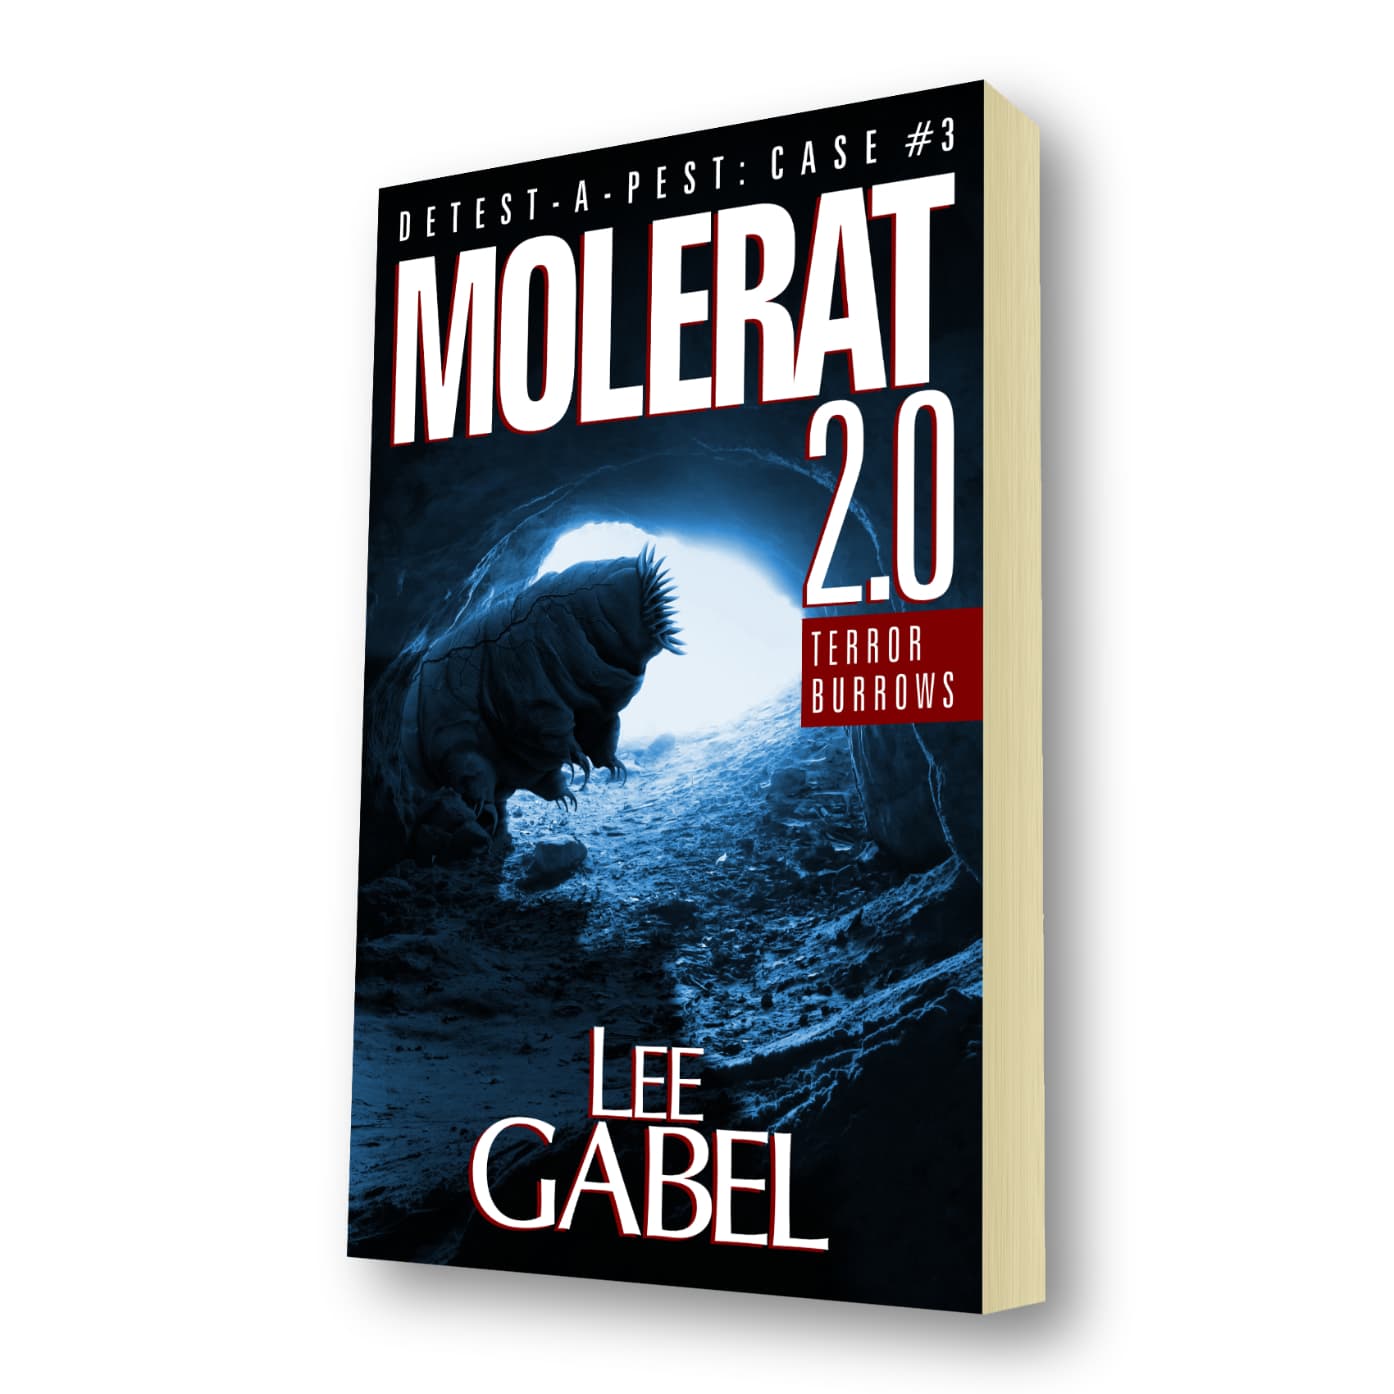 Molerat 2.0 virtual paperback image (340 pages.)